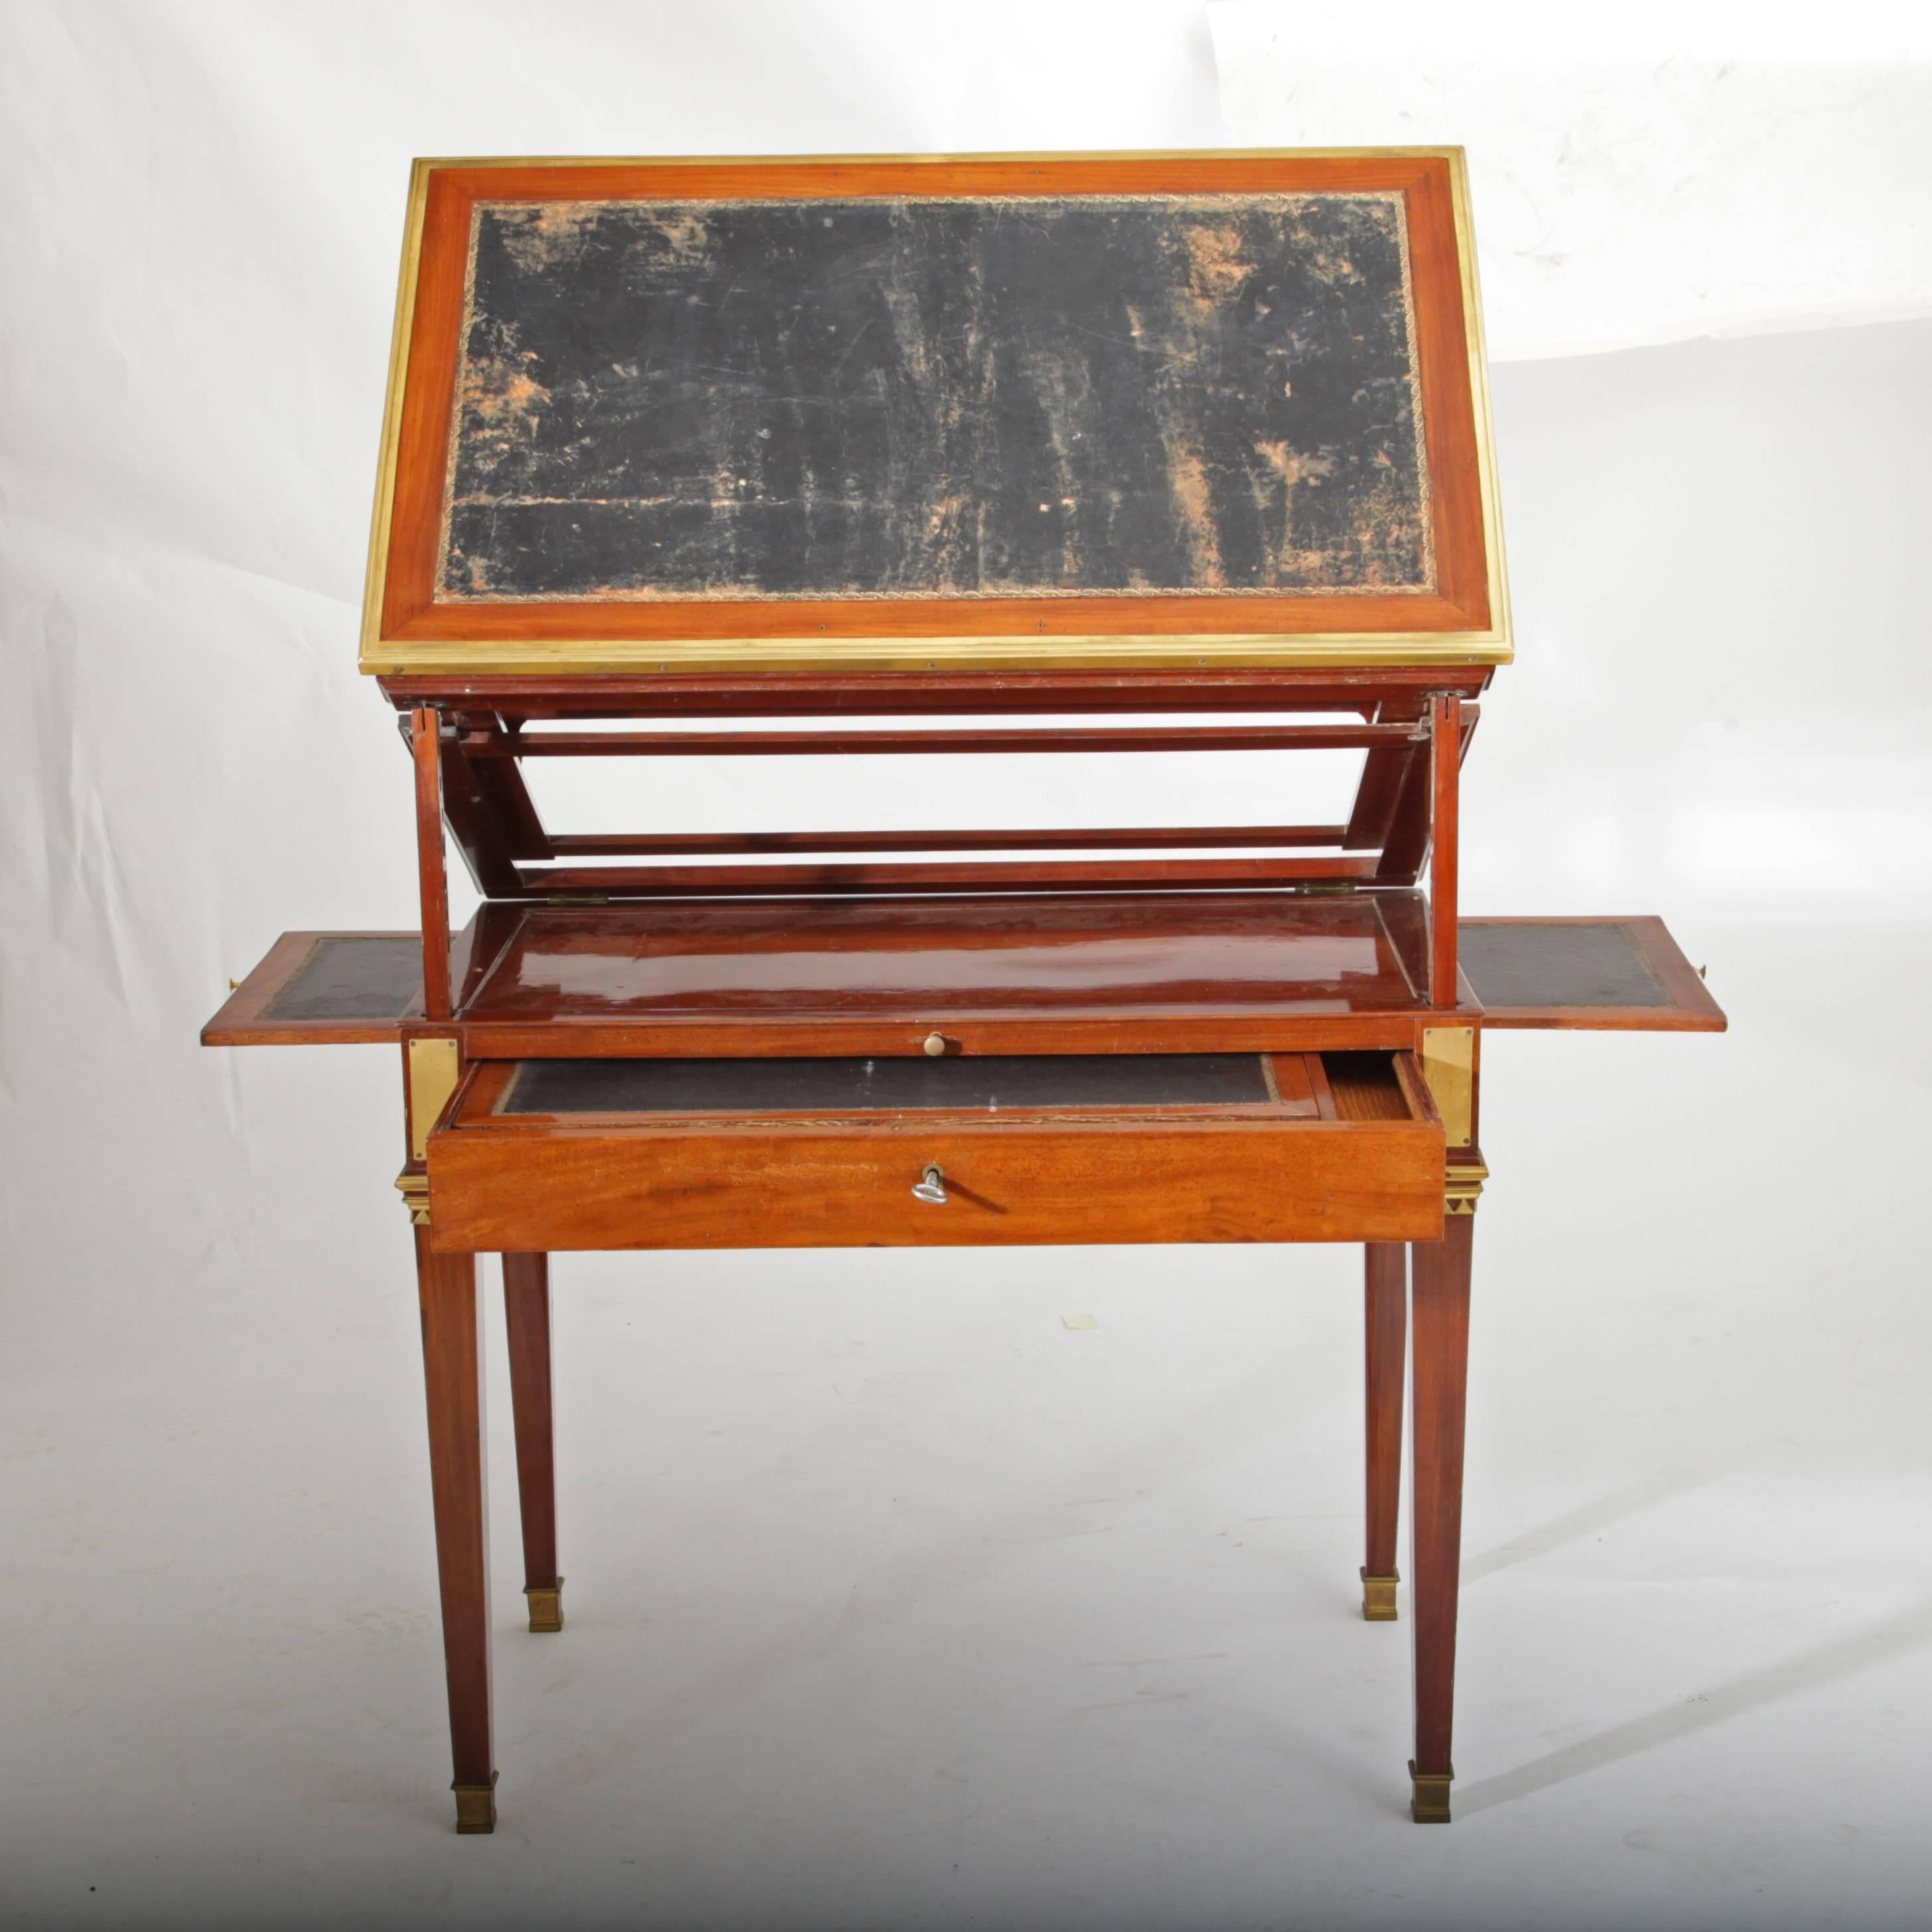 Directoire Writing Table à la Tronchin, circa 1800